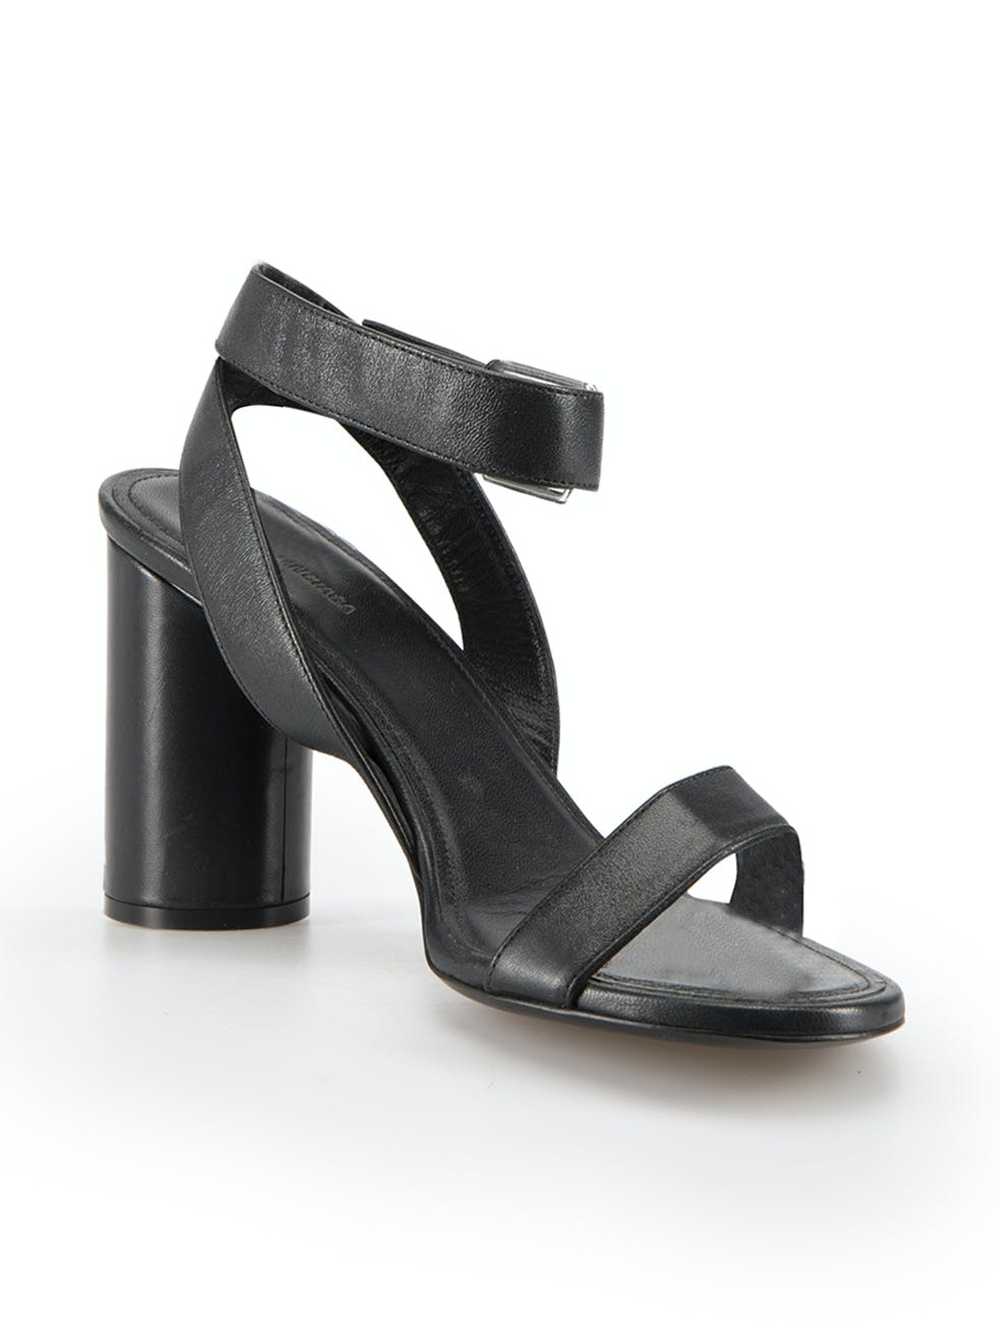 Balenciaga Black Leather Strappy Mid Heel Sandals - image 2